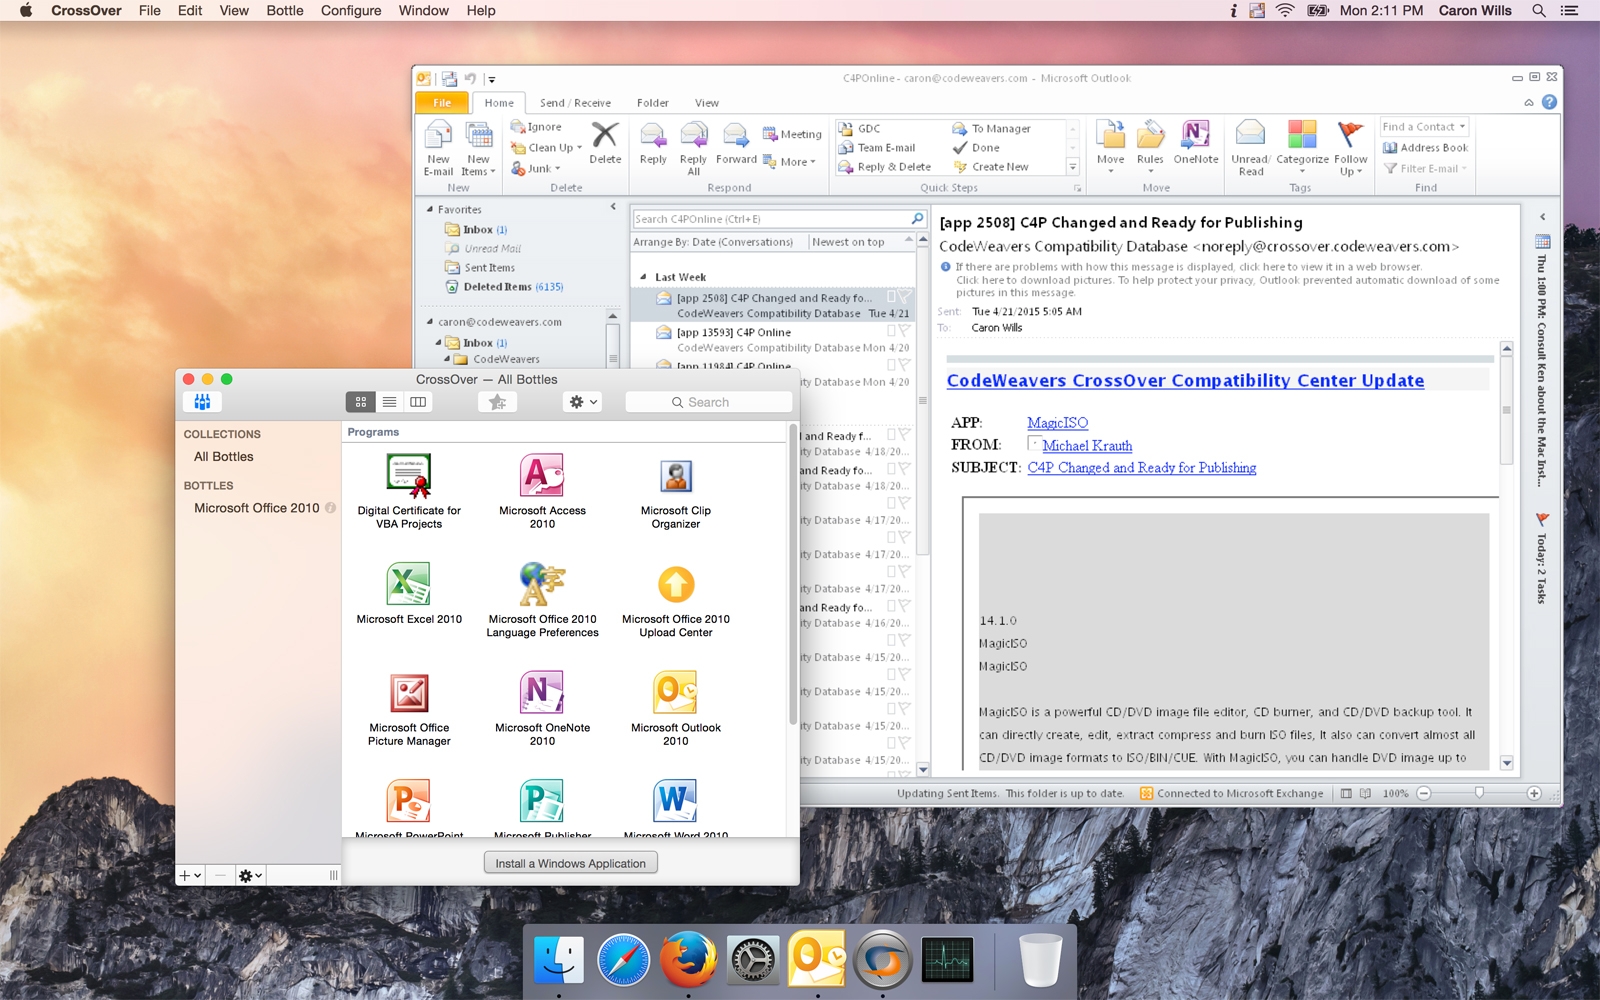 mac virtual machine on windows 7